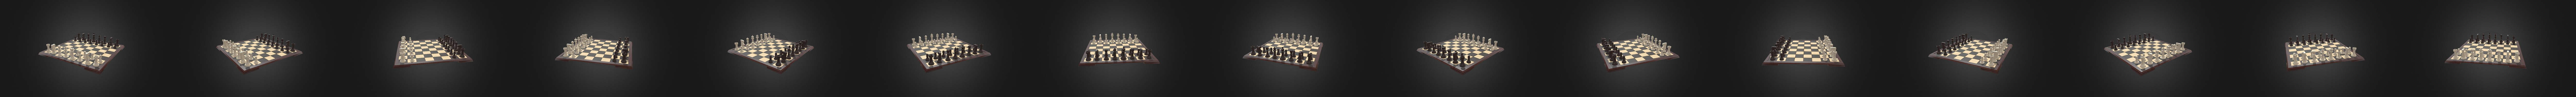 Text Flip - Chess Set, 3D models download